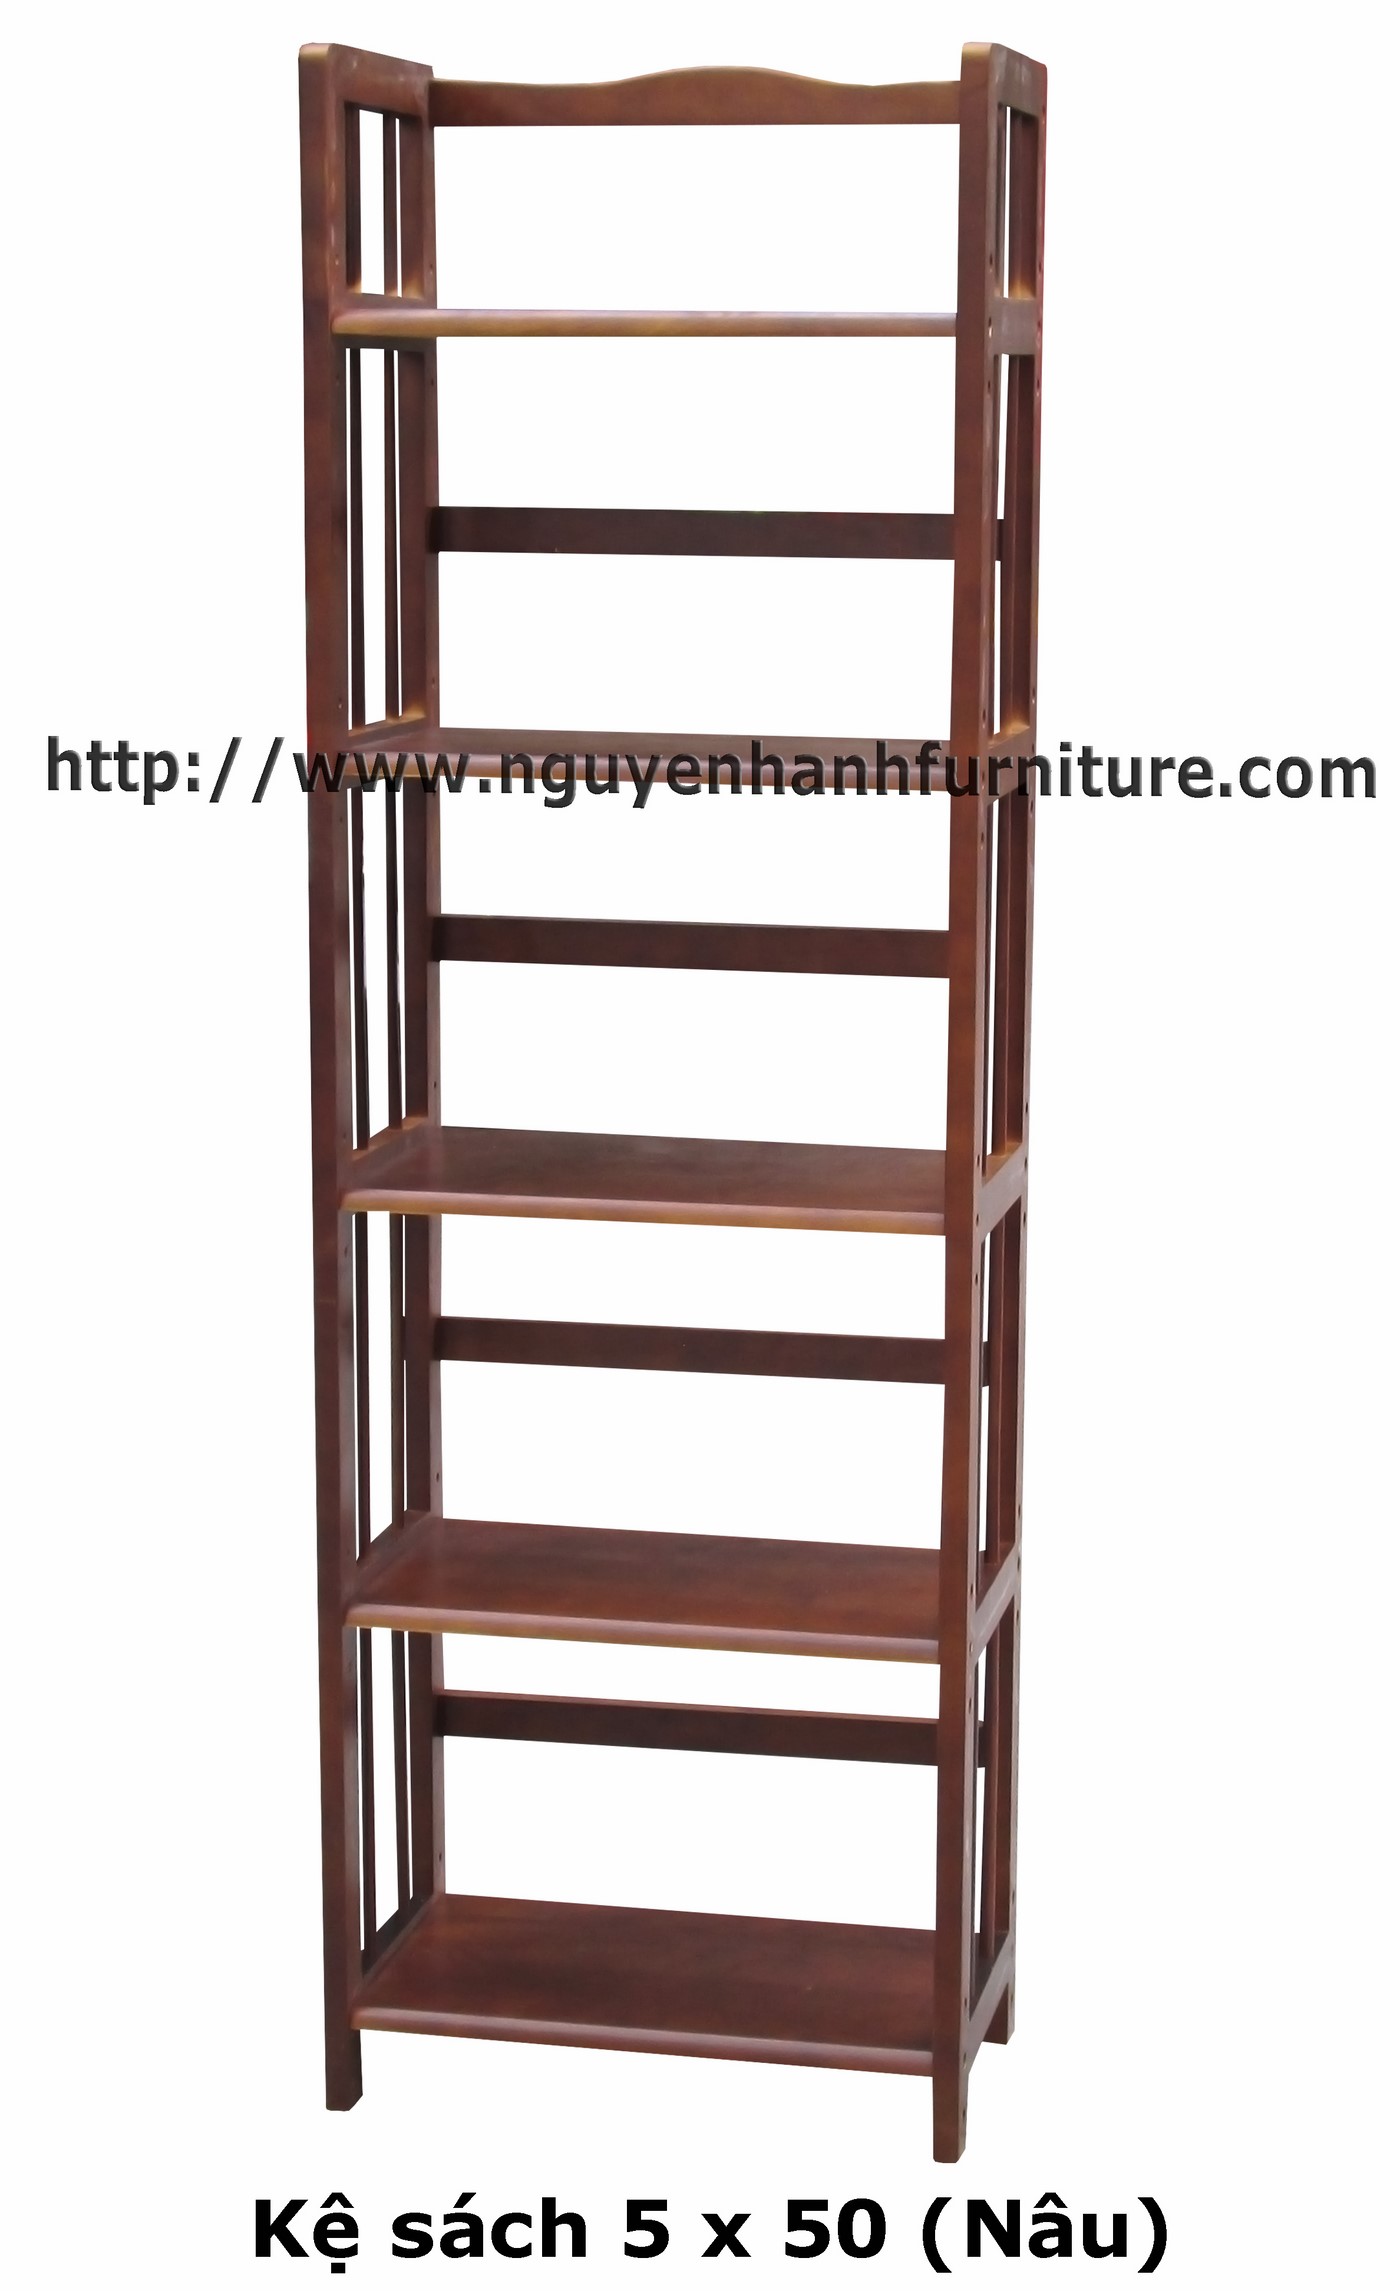 Name product: 5 storey Adjustable Bookshelf 50 (Brown) - Dimensions: 50 x 28 x 157 (H) - Description: Wood natural rubber